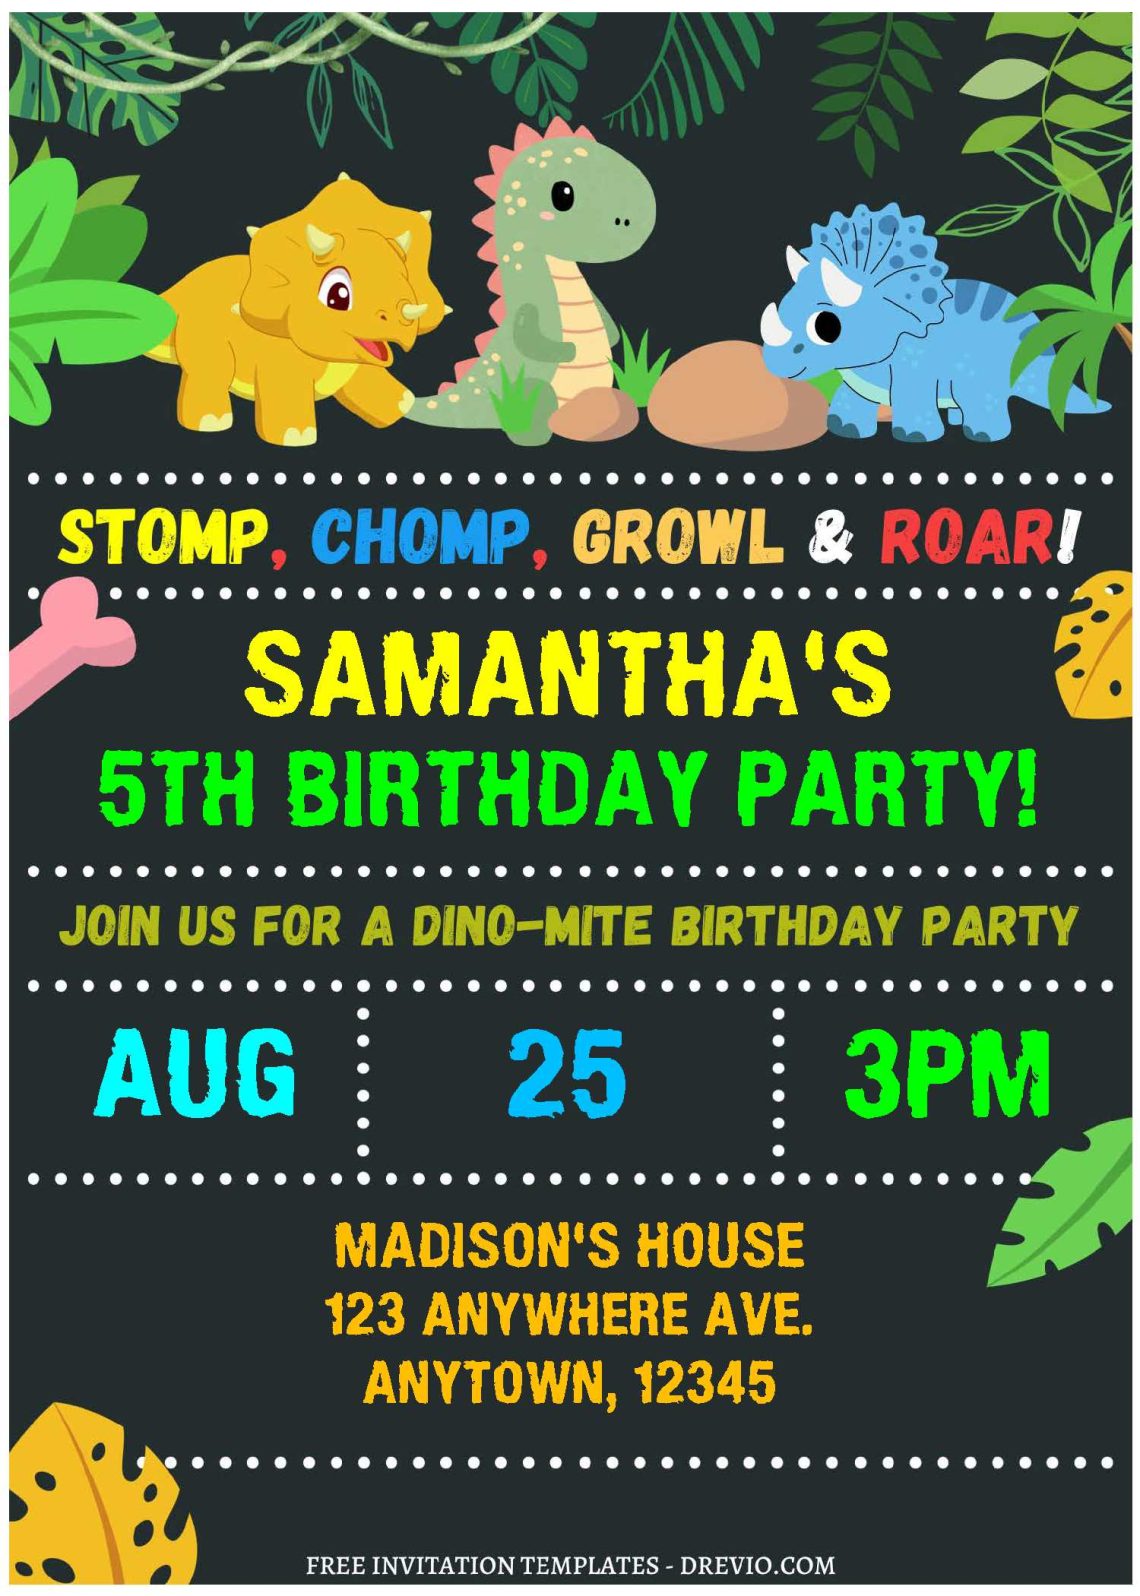 (Free Editable PDF) Cartoon Chalkboard Dino Birthday Invitation Templates with colorful text